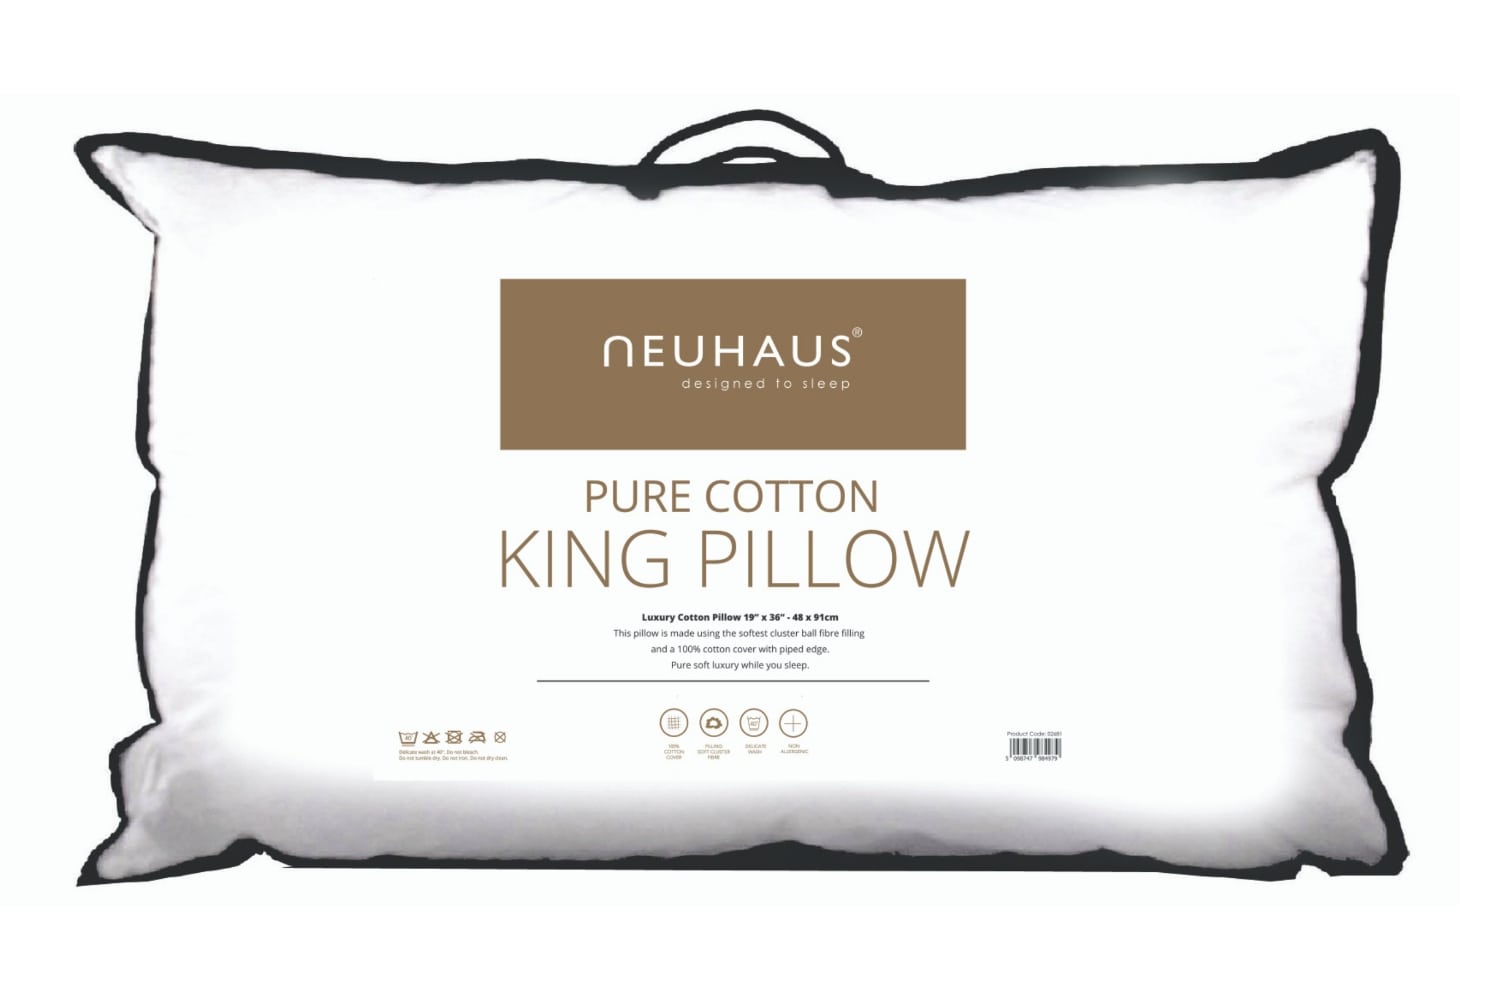 Neuhaus Pure Cotton King Pillow